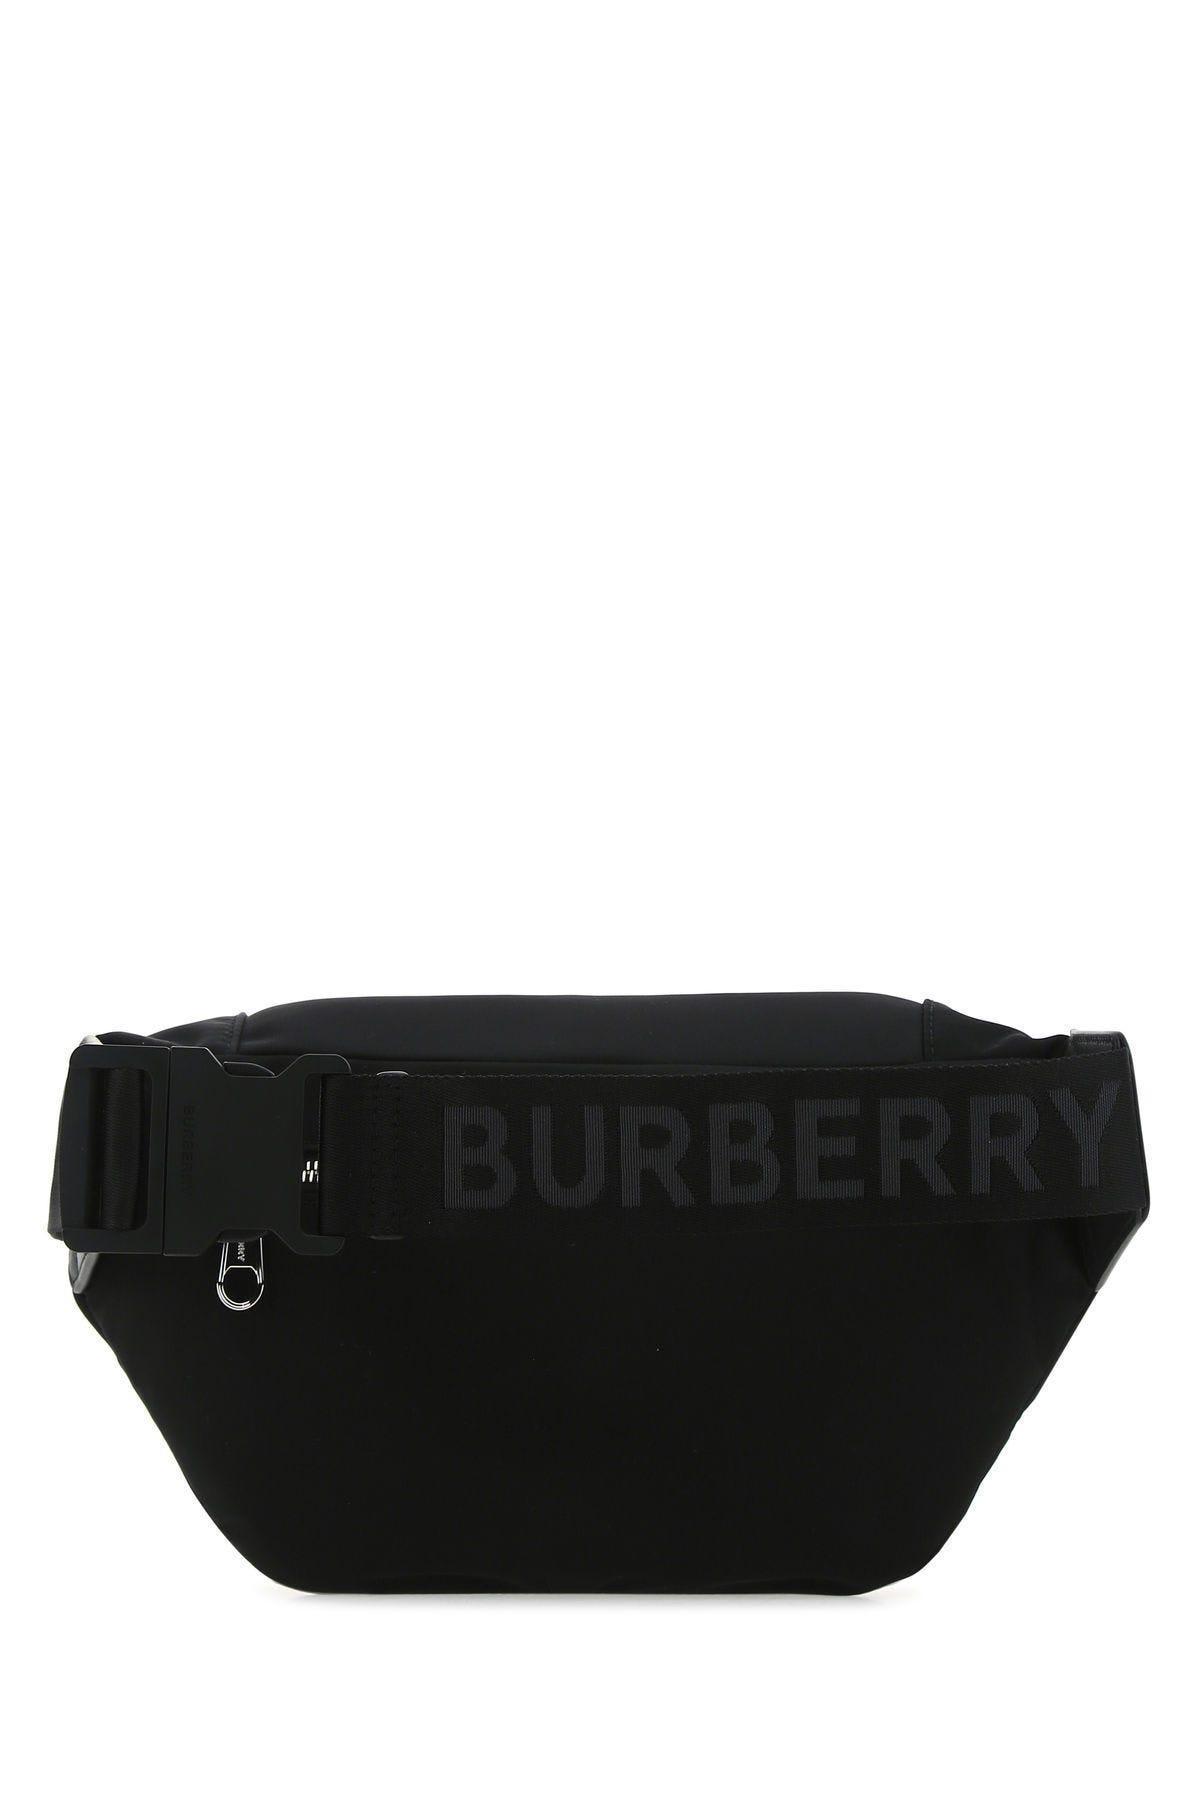 BURBERRY waist bag black nylon